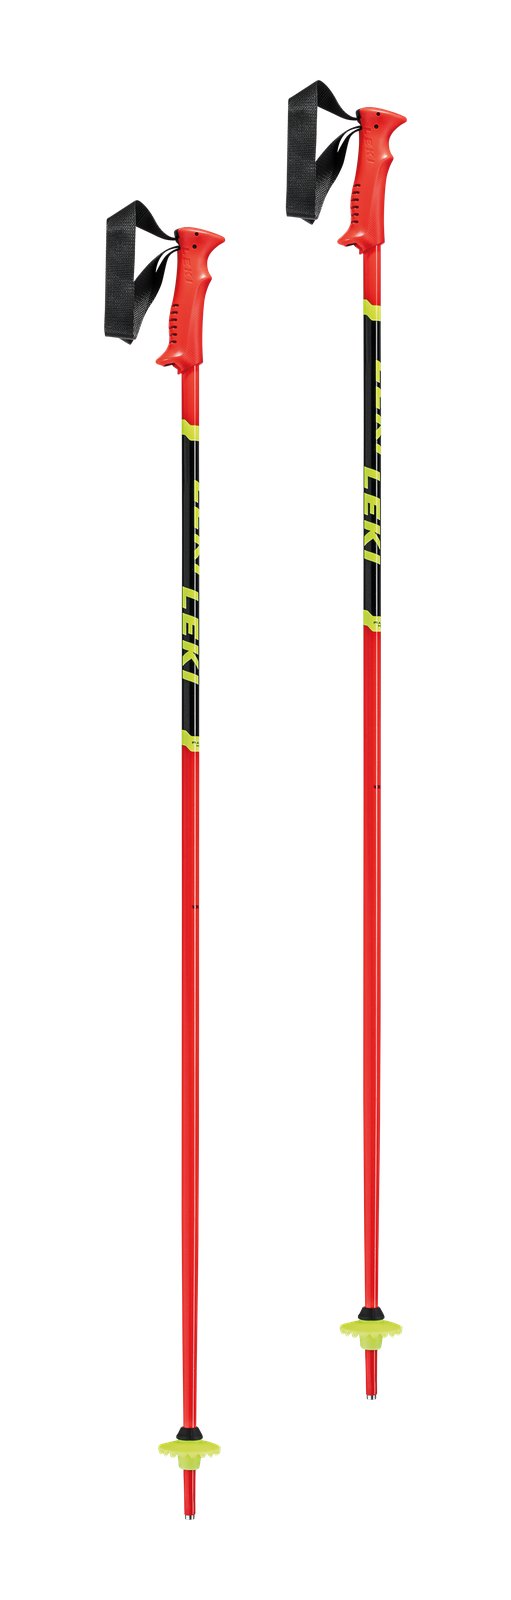 Leki Kids Ski Poles Red Yellow & Black SKI POLES Leki 80cm  